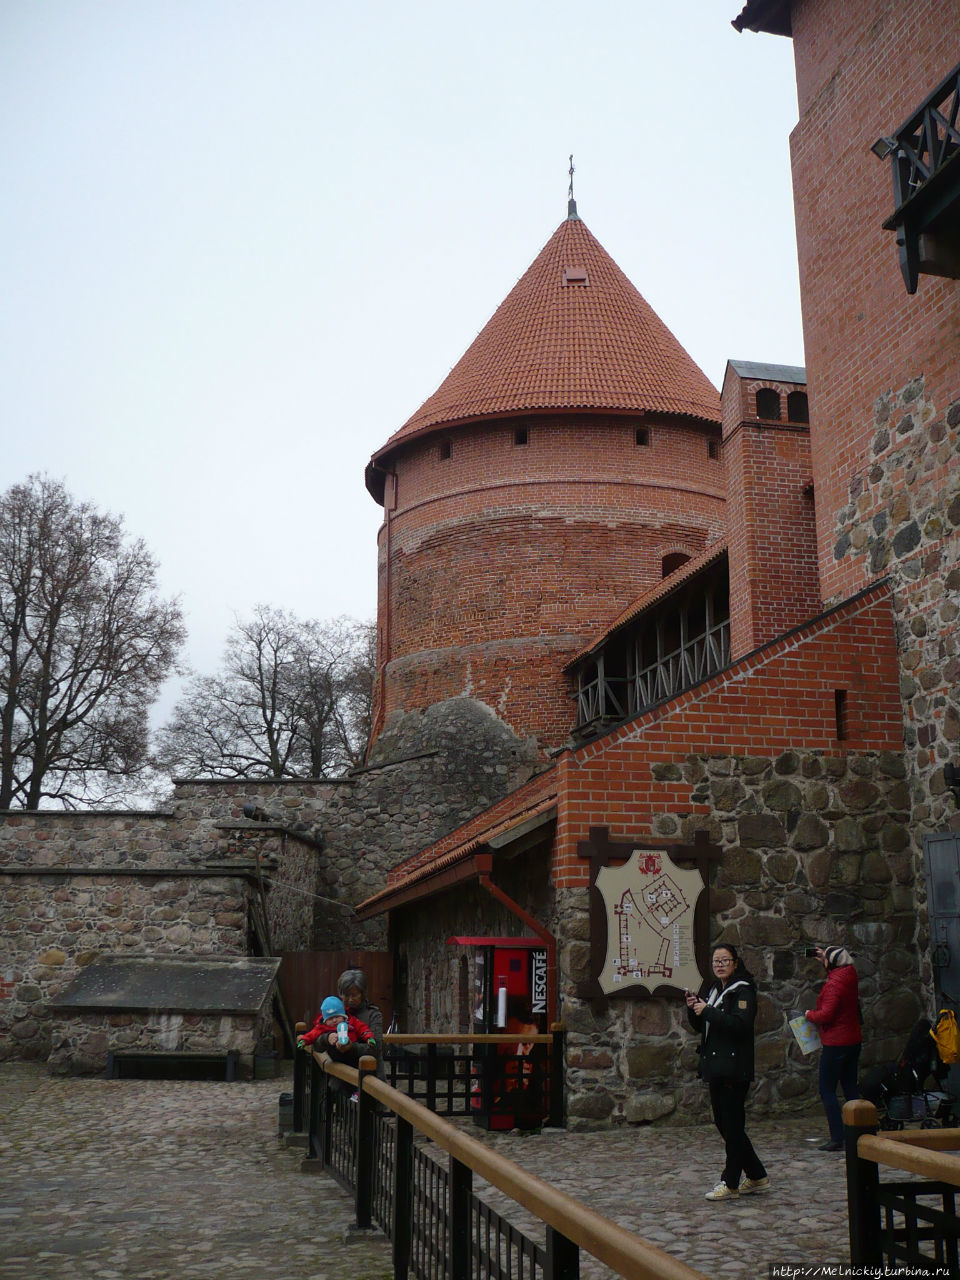 Тракайский замок Тракай, Литва